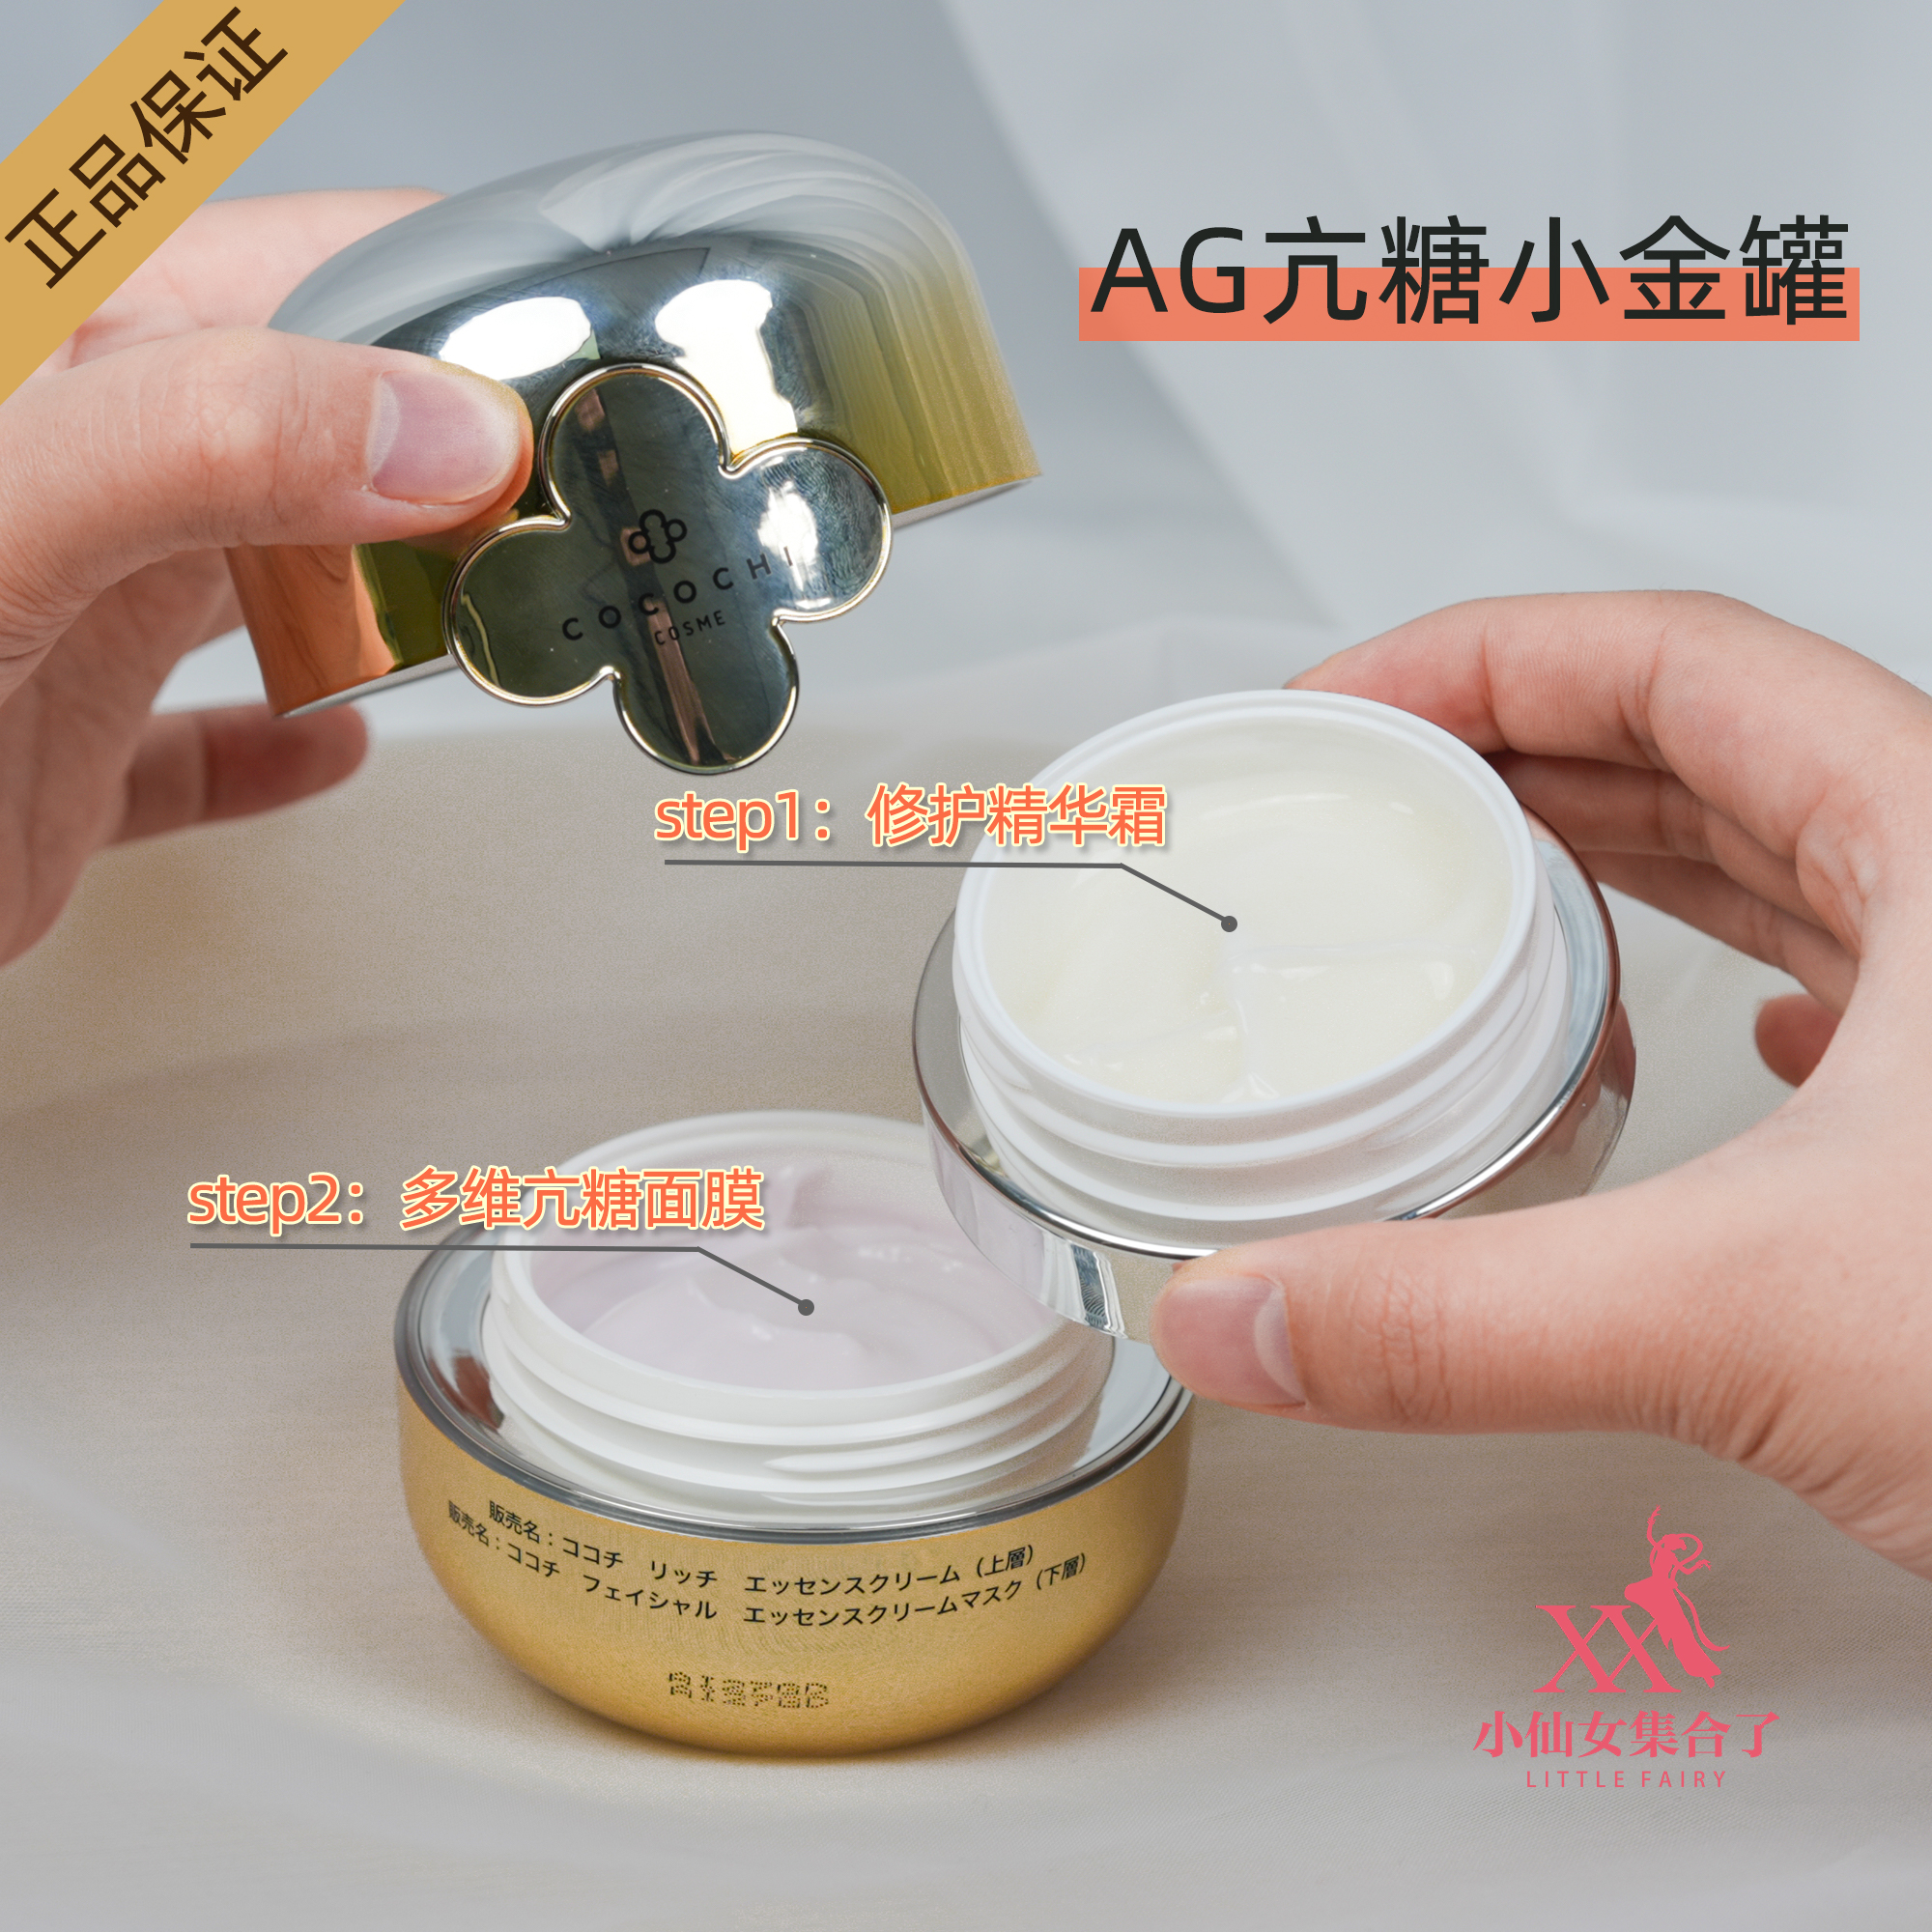 抗糖焕亮丨Cocochi日本AG抗糖小金罐涂抹面膜 先霜后膜两部曲